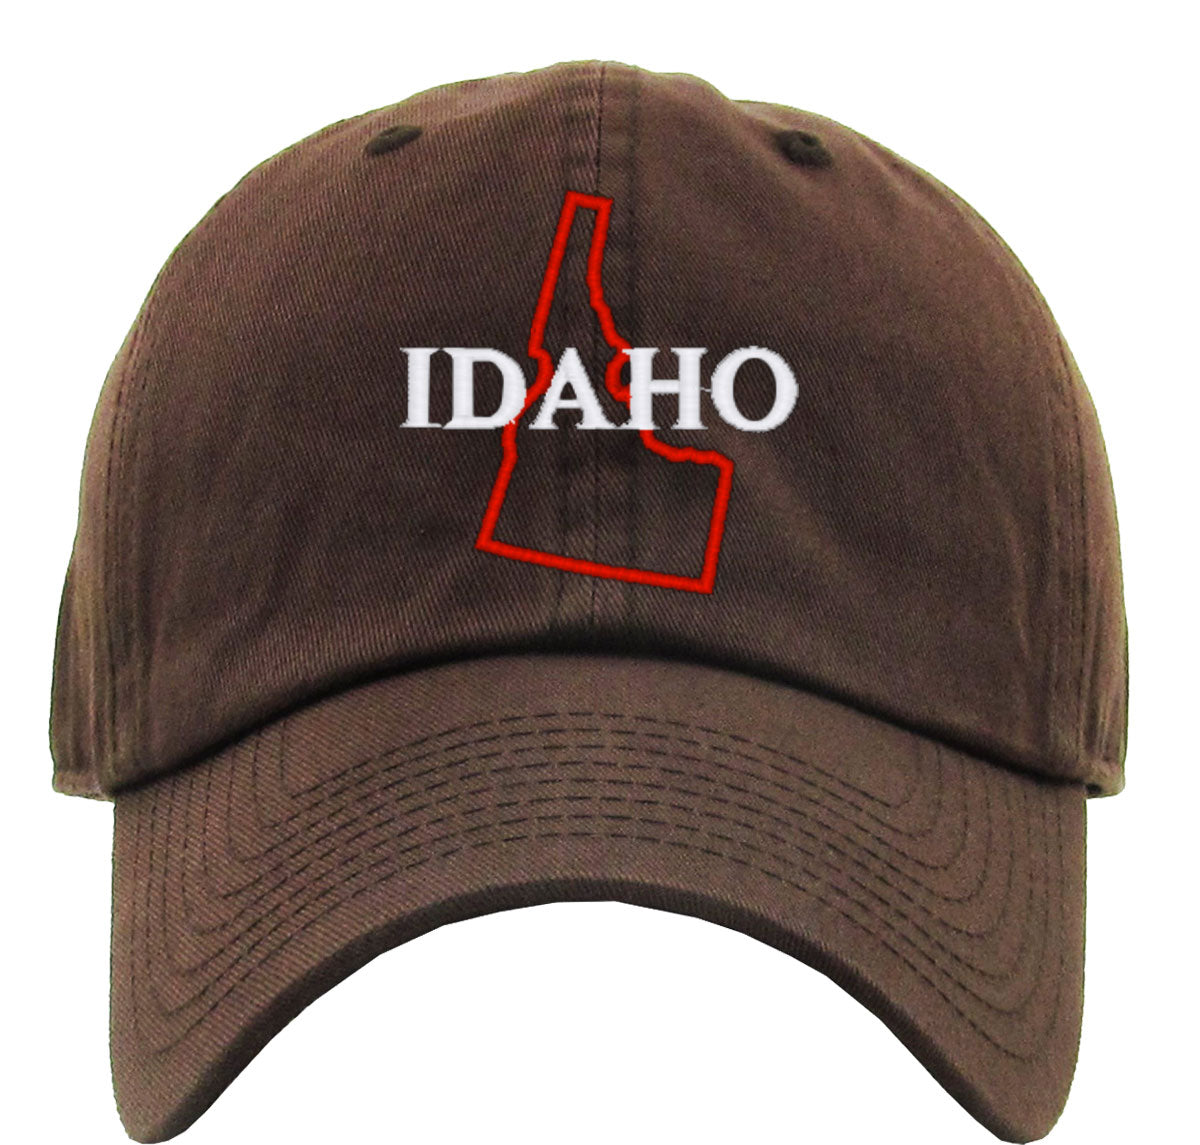 Idaho Premium Baseball Cap